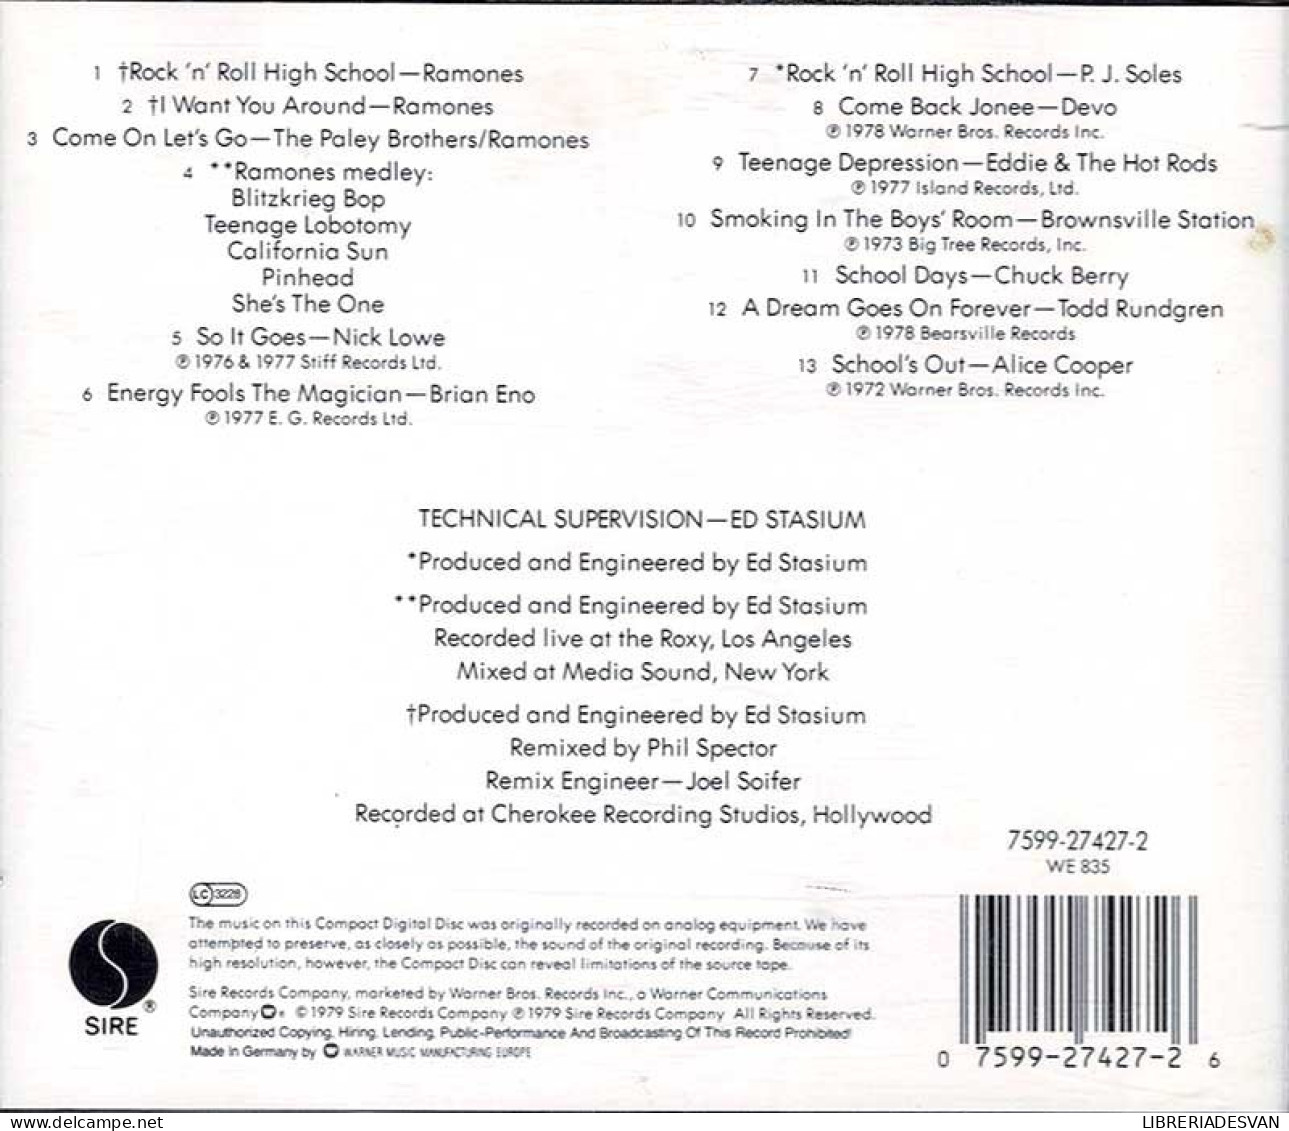 Rock 'N' Roll High School. CD - Soundtracks, Film Music